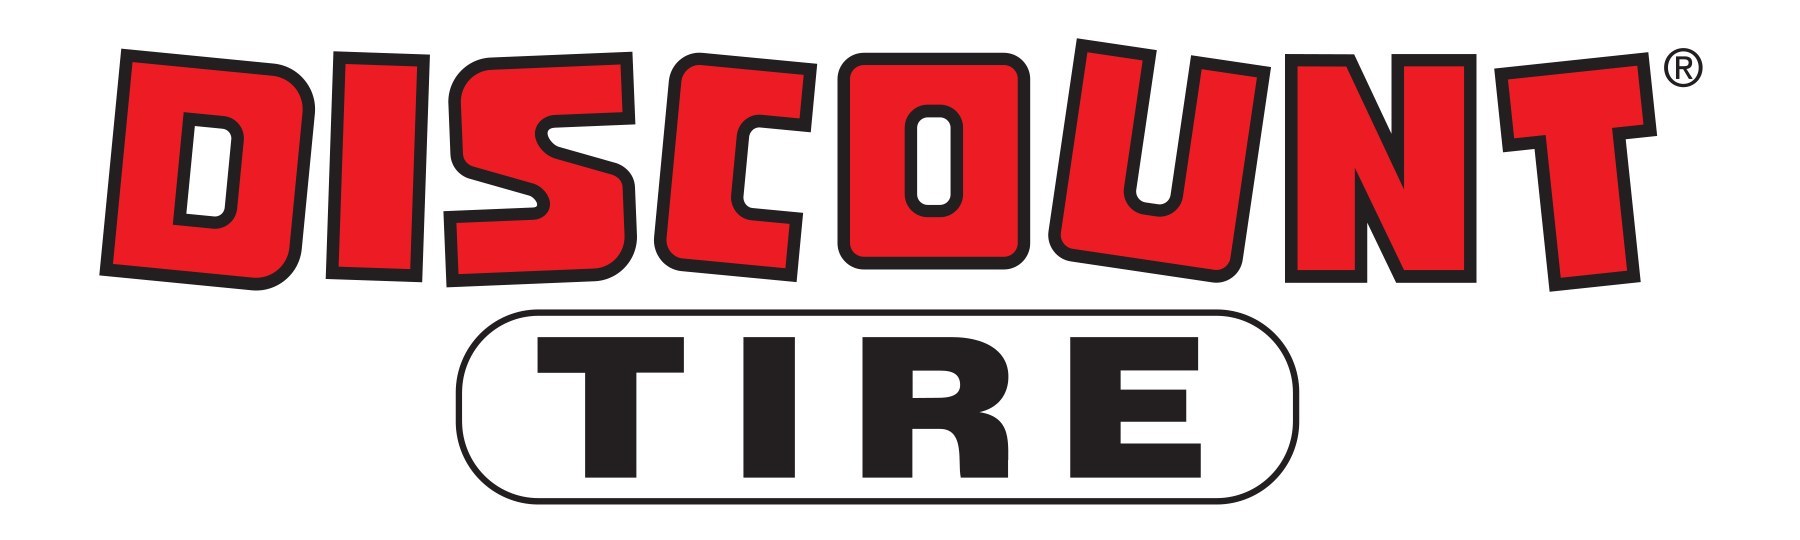 Discount Tire Plans New Arizona Headquarters | THE SHOP